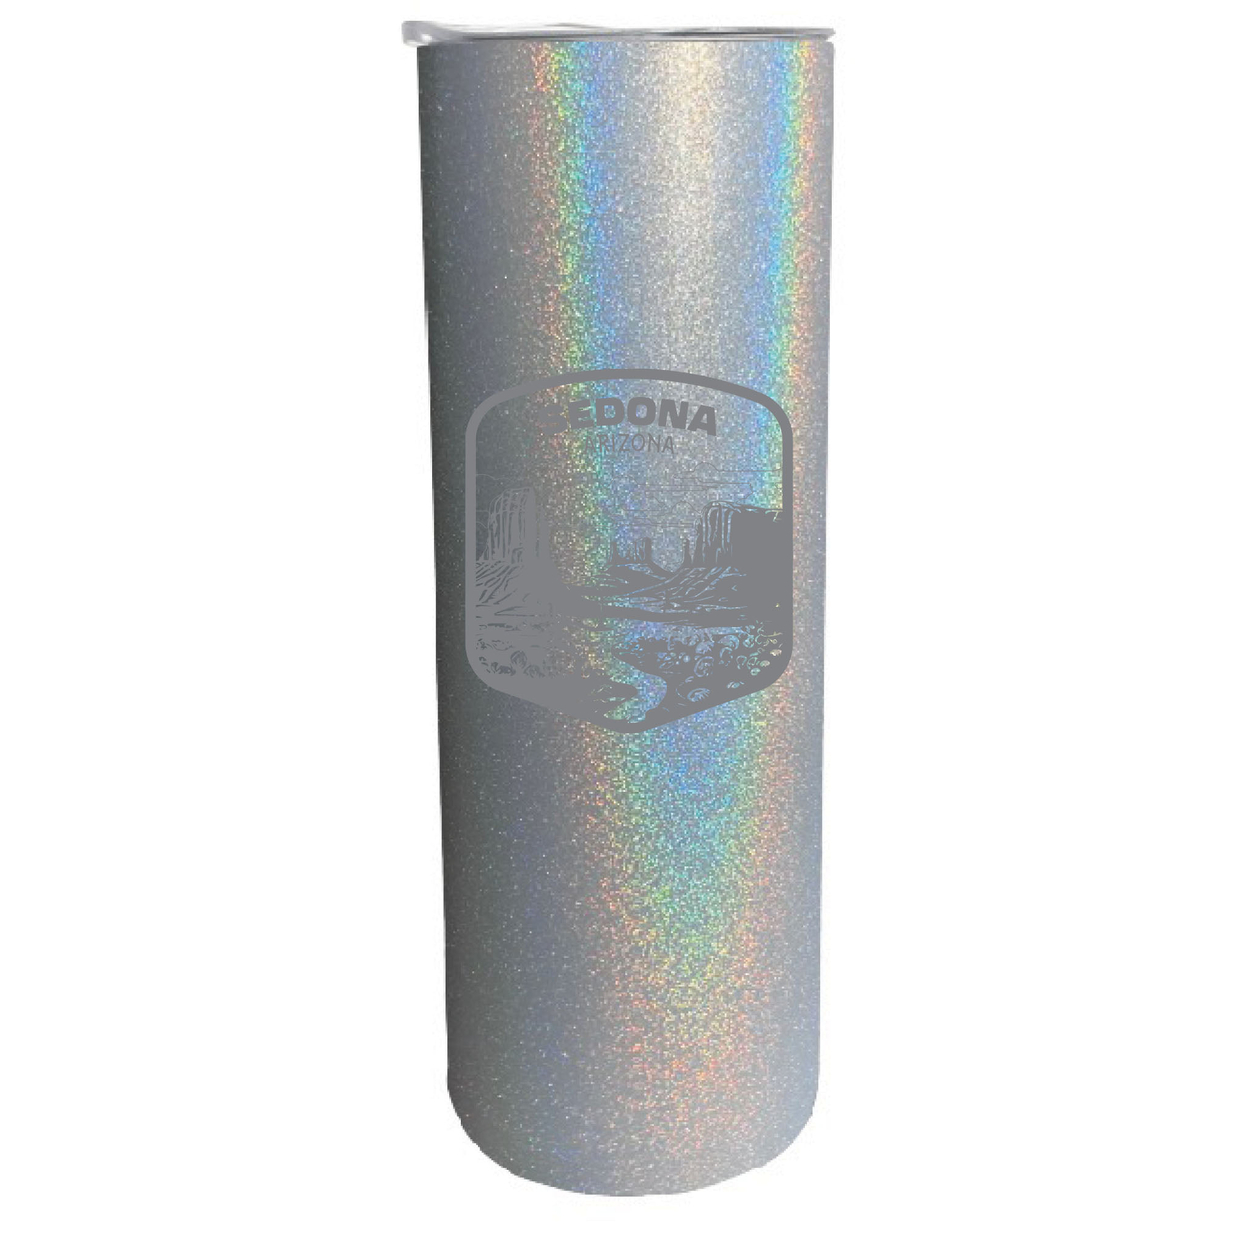 Sedona Arizona Souvenir 20 Oz Engraved Insulated Stainless Steel Skinny Tumbler - Gray Glitter,,2-Pack